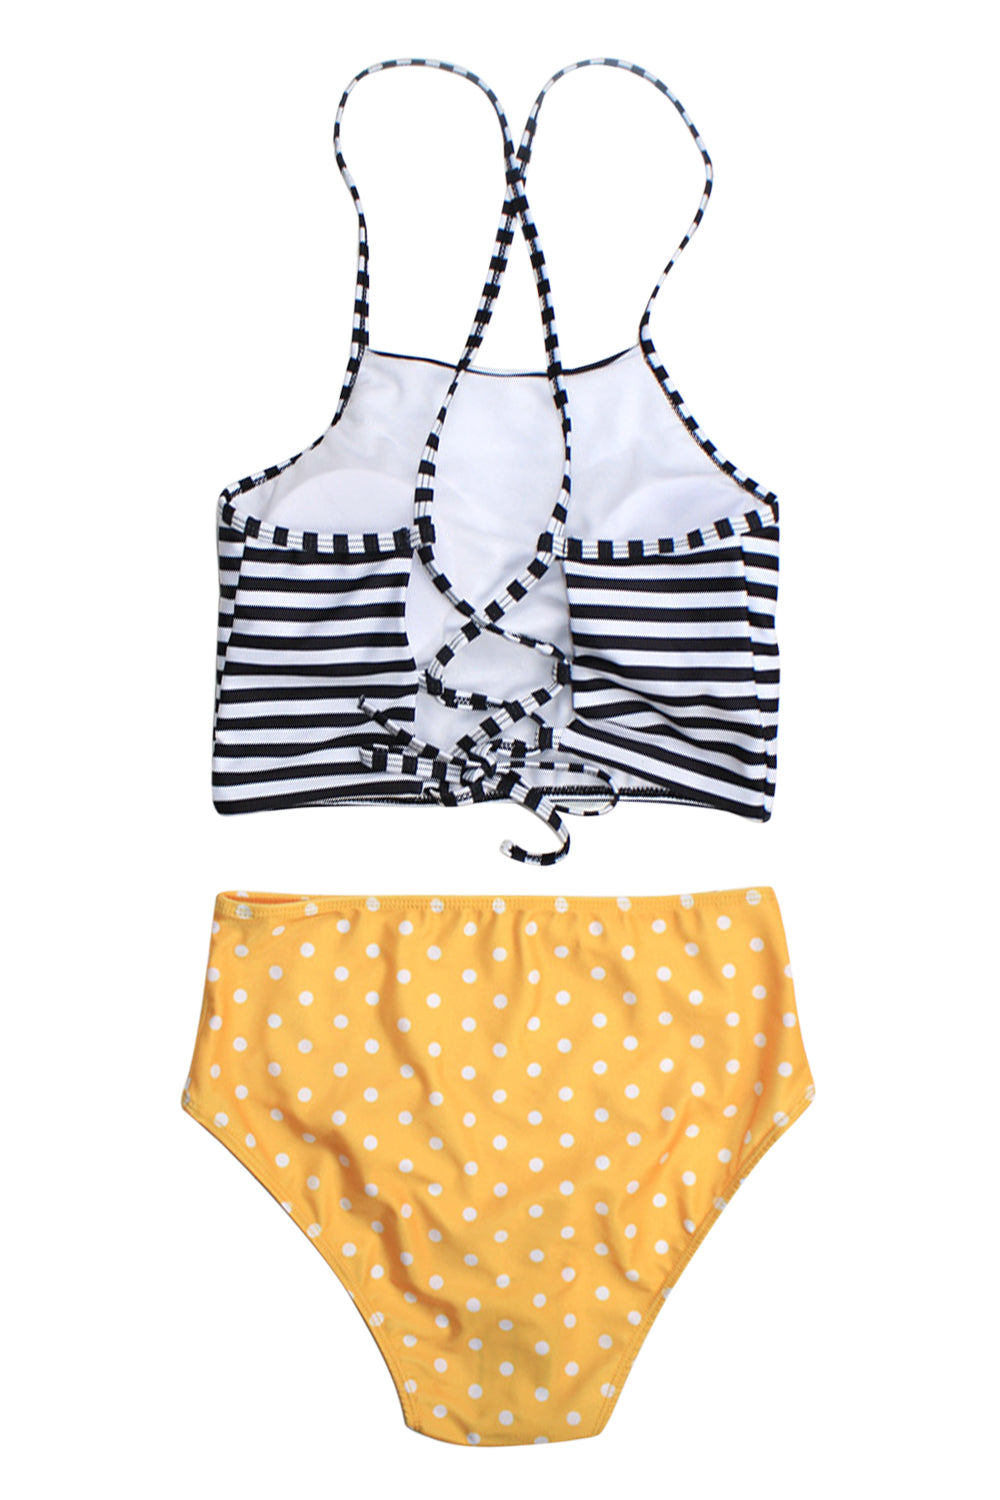 Iyasson Summer Beach Vintage Halter Bikini Set